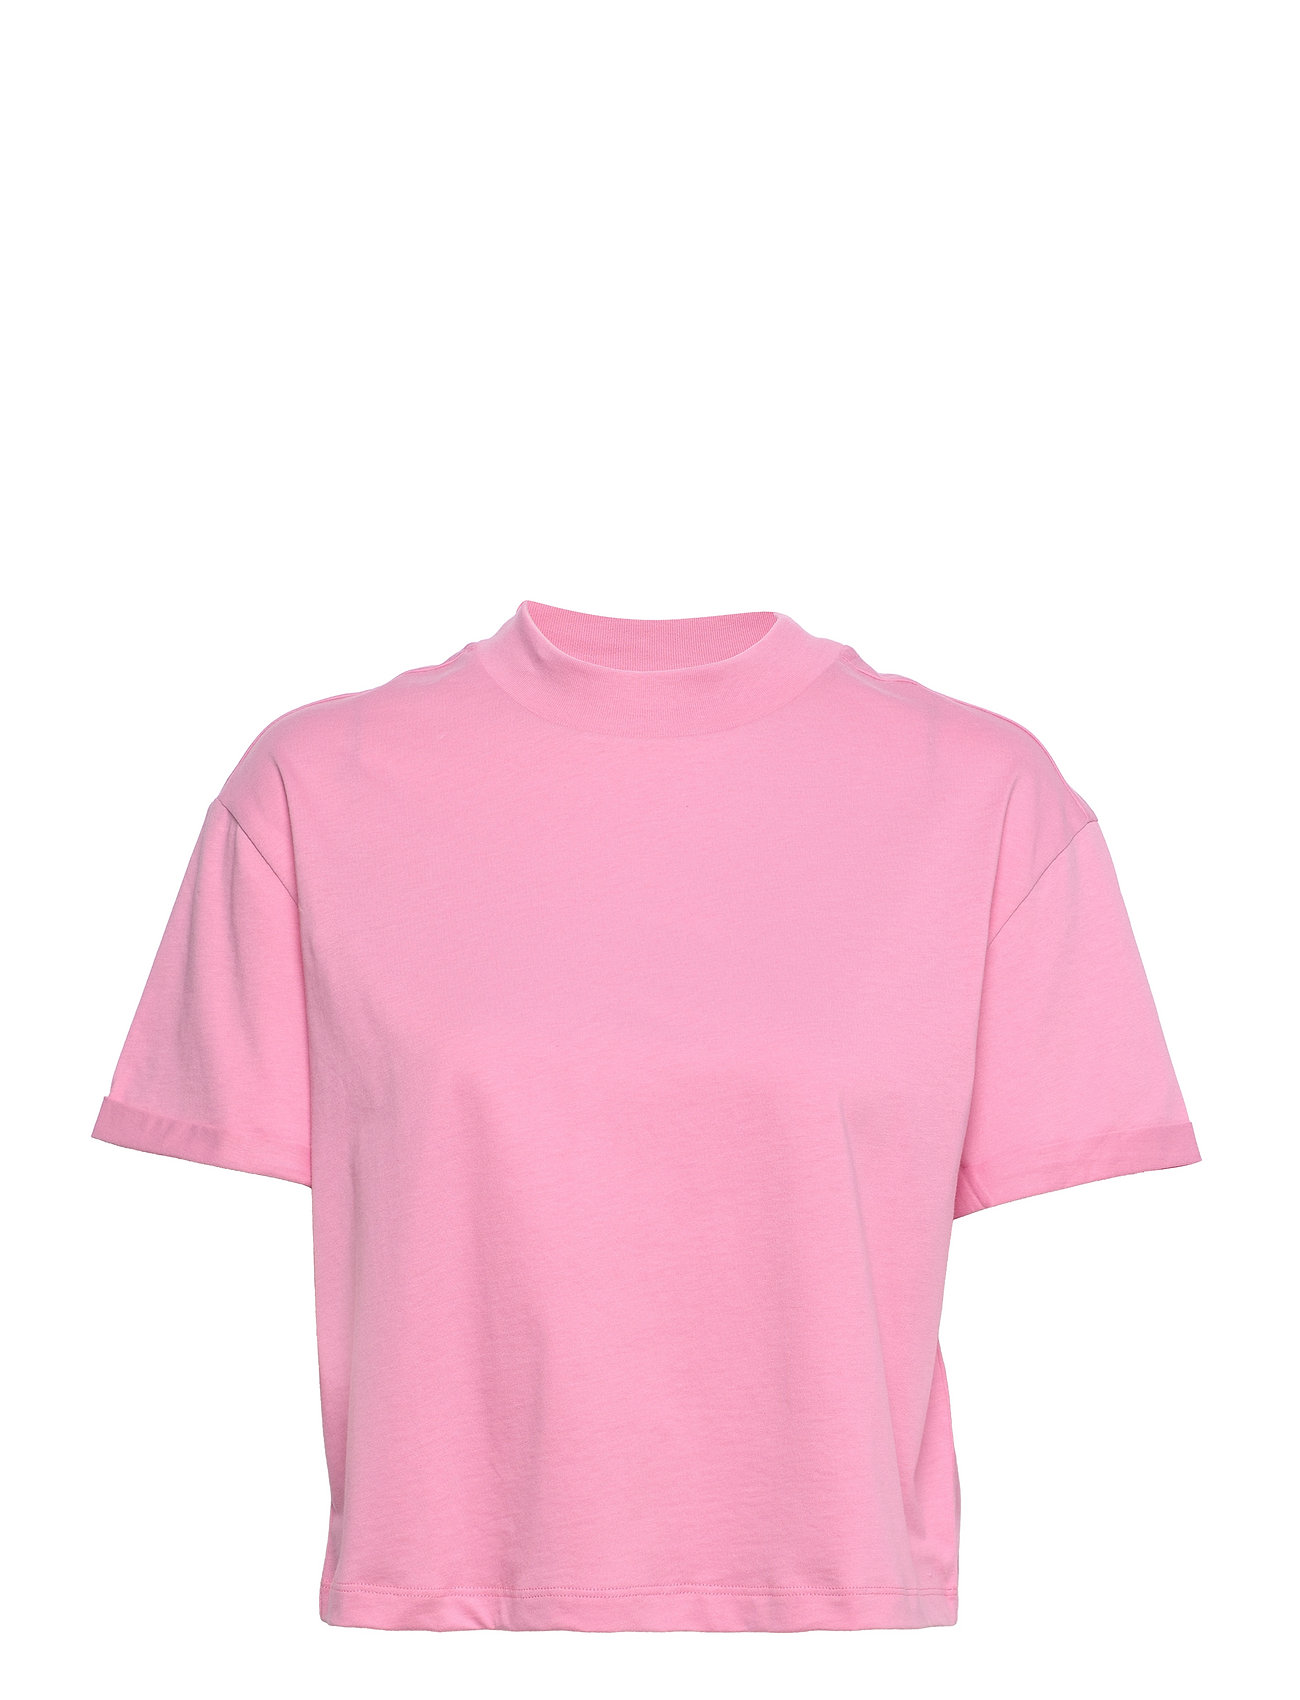 Louna T-Shirt T-shirts & Tops Short-sleeved Rosa EDITED